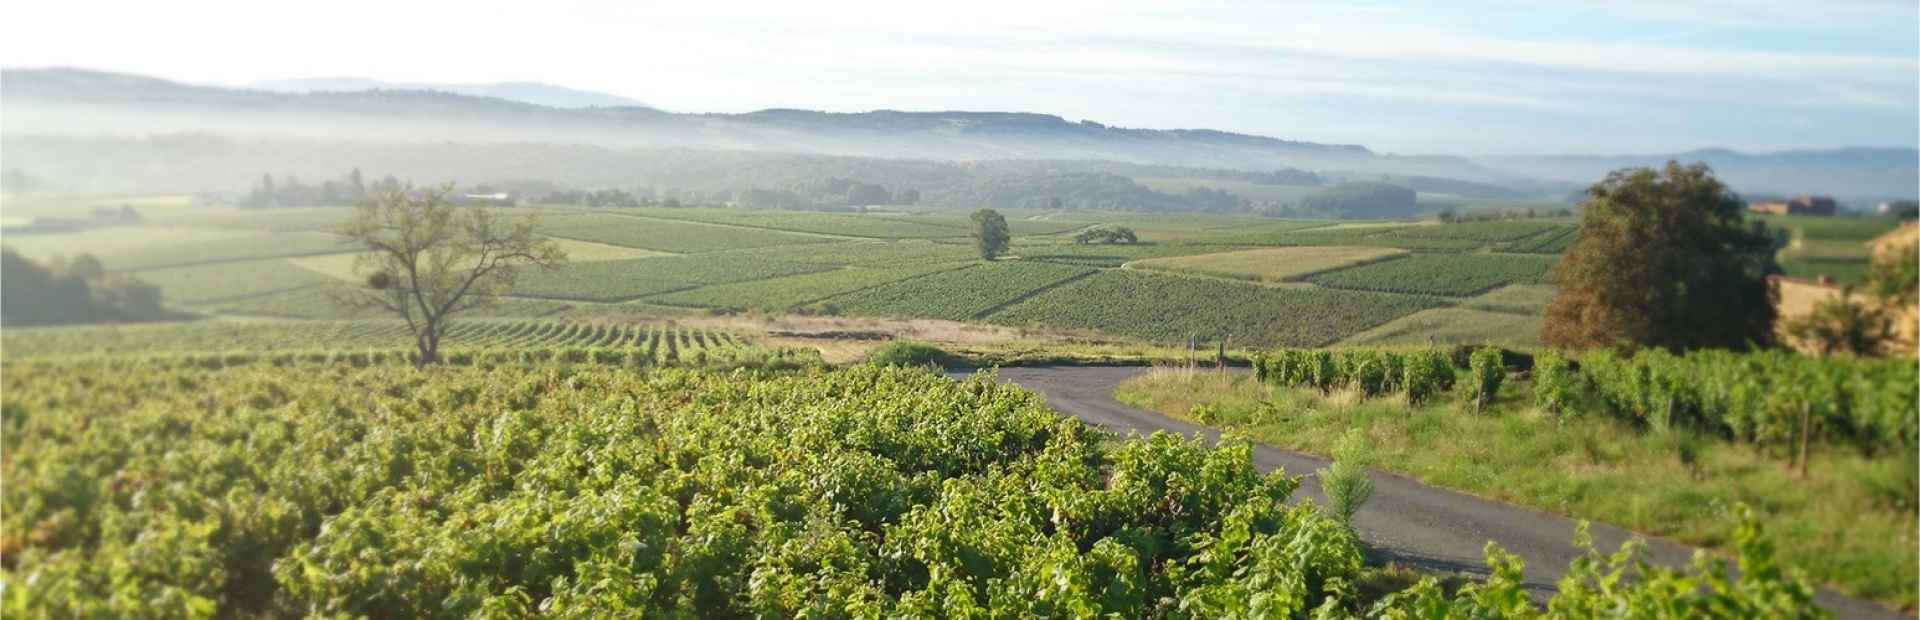 Winesof the appellation Saint-véran